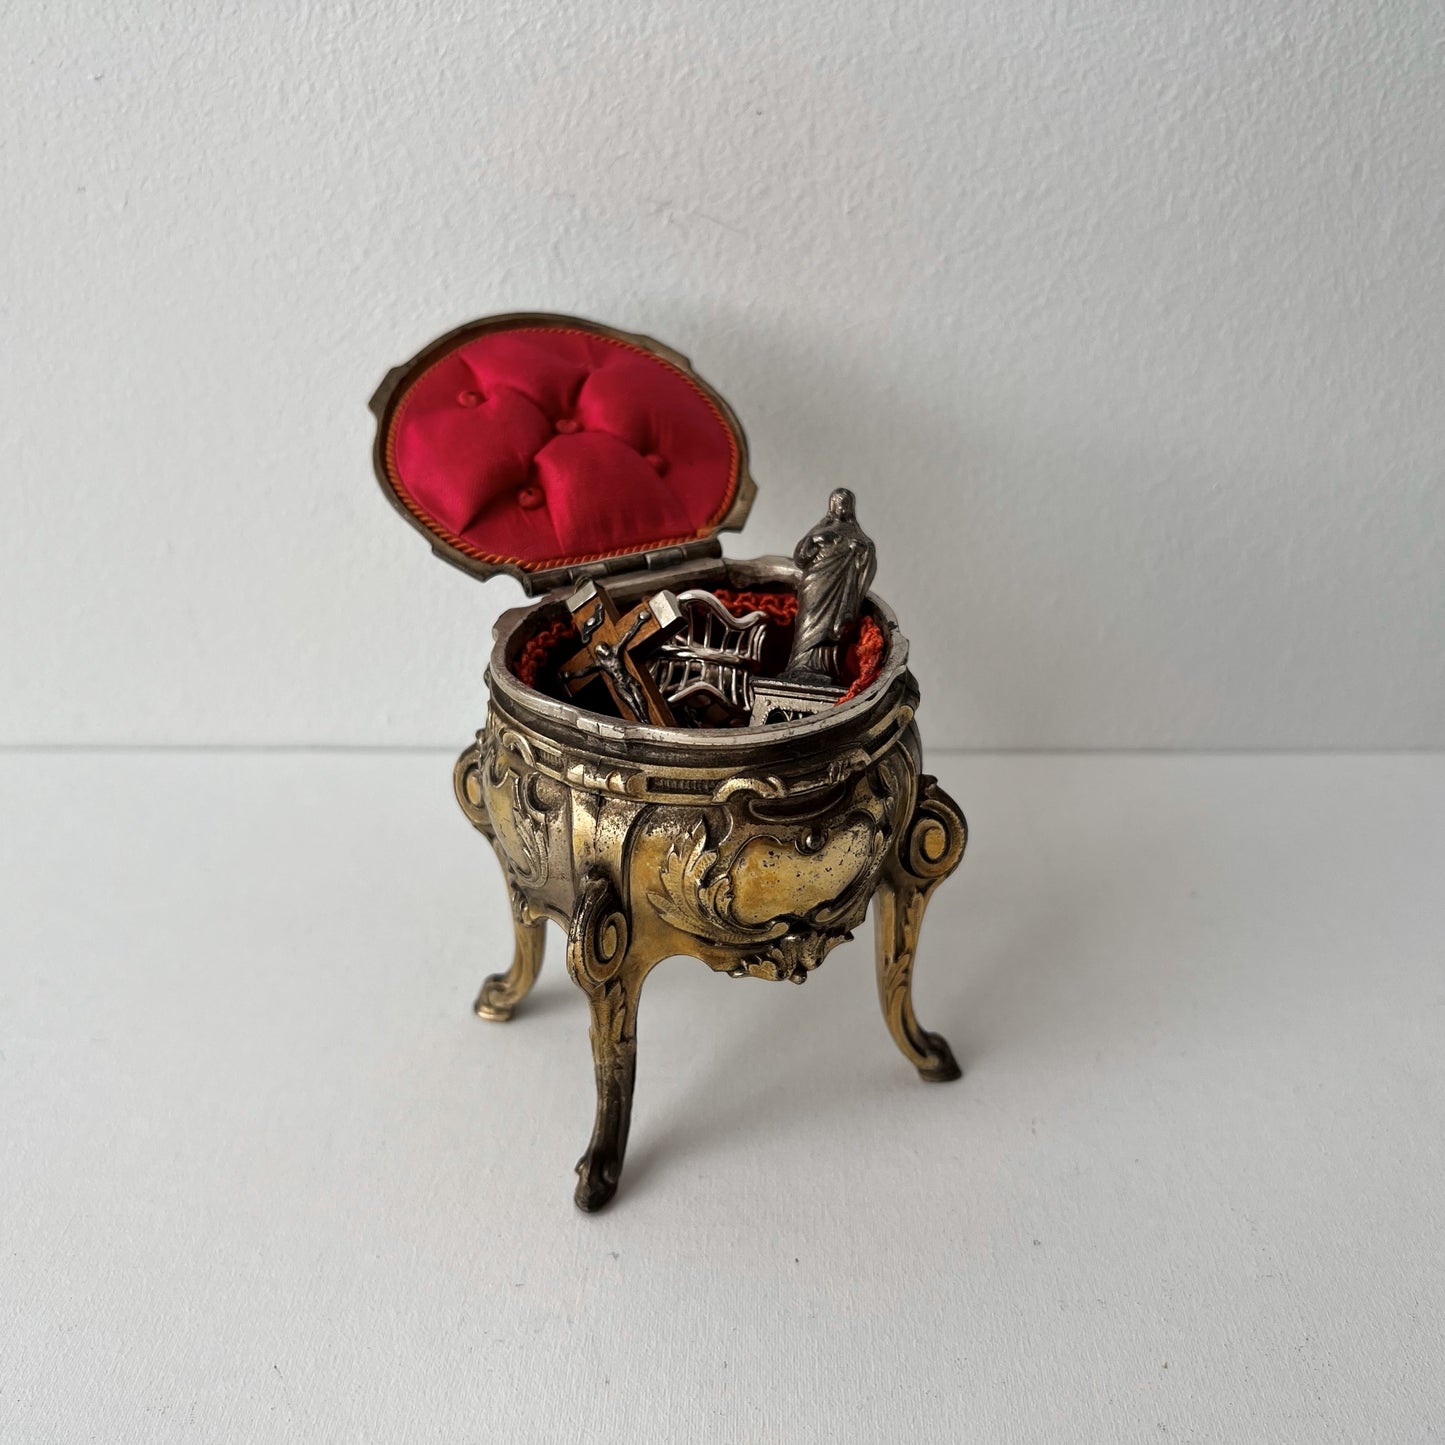 【Antique】France - 1900s Jewelry Box